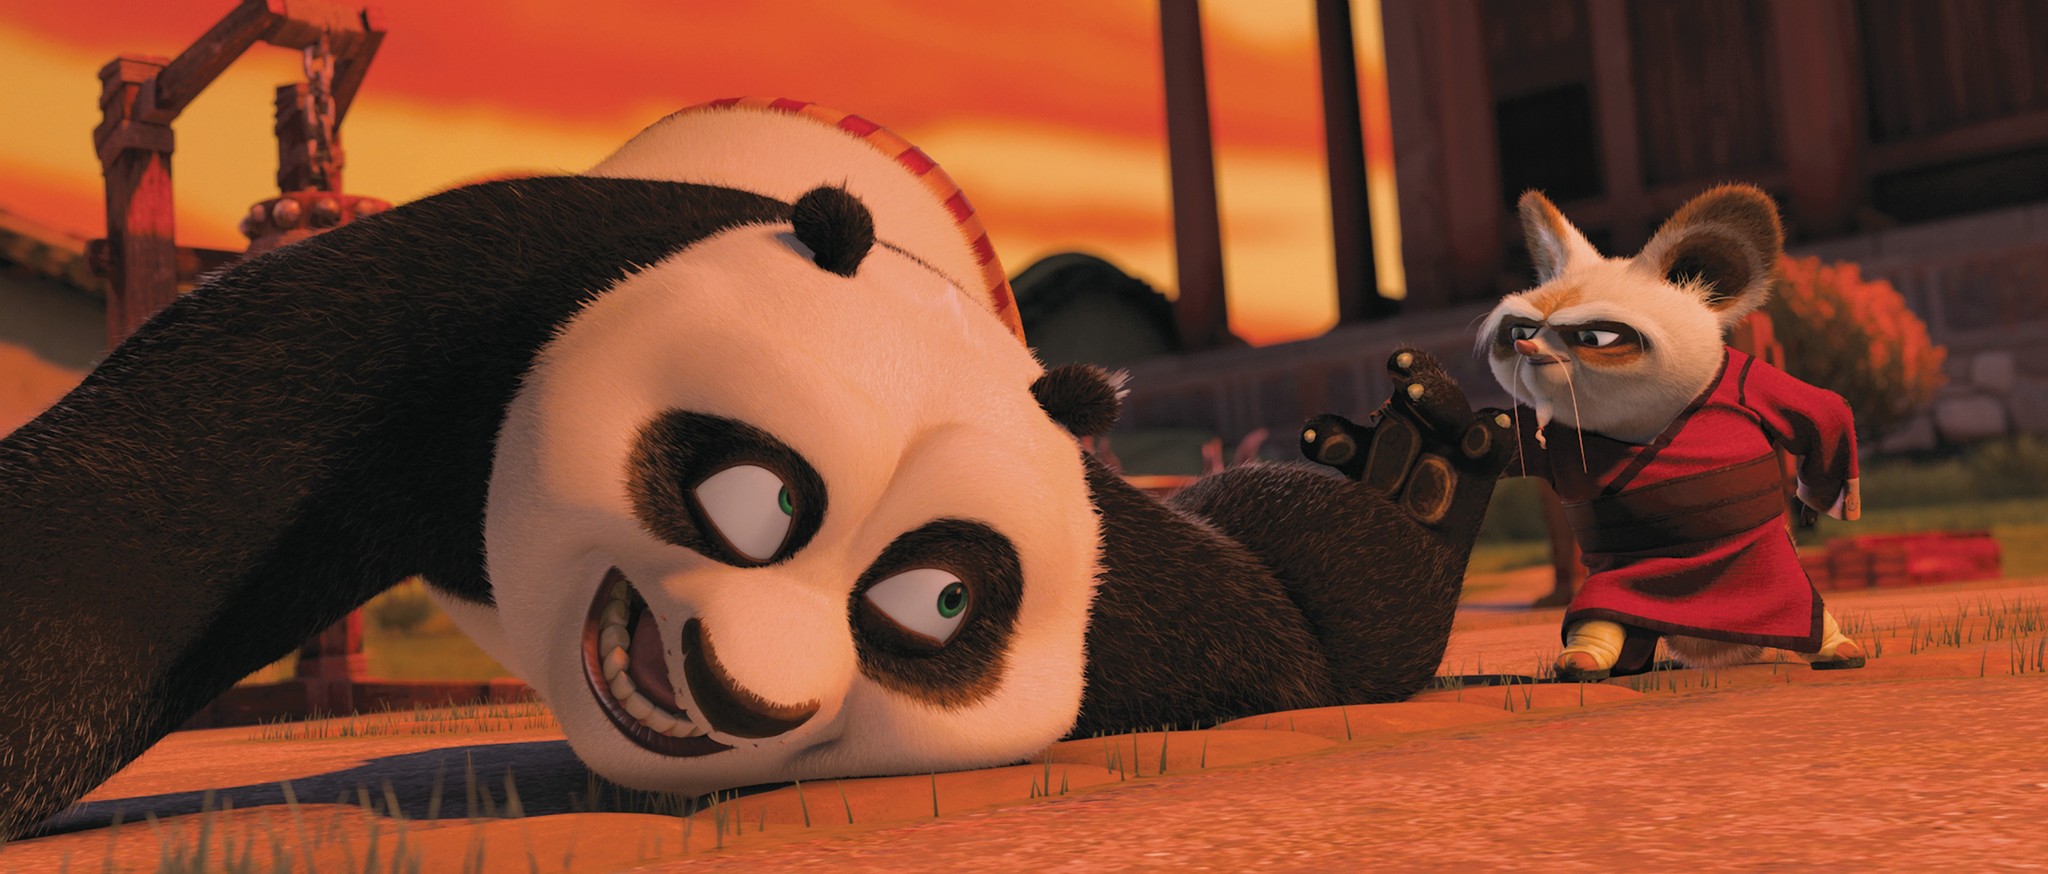 Po training with Master Shifu in Kung Fo Panda